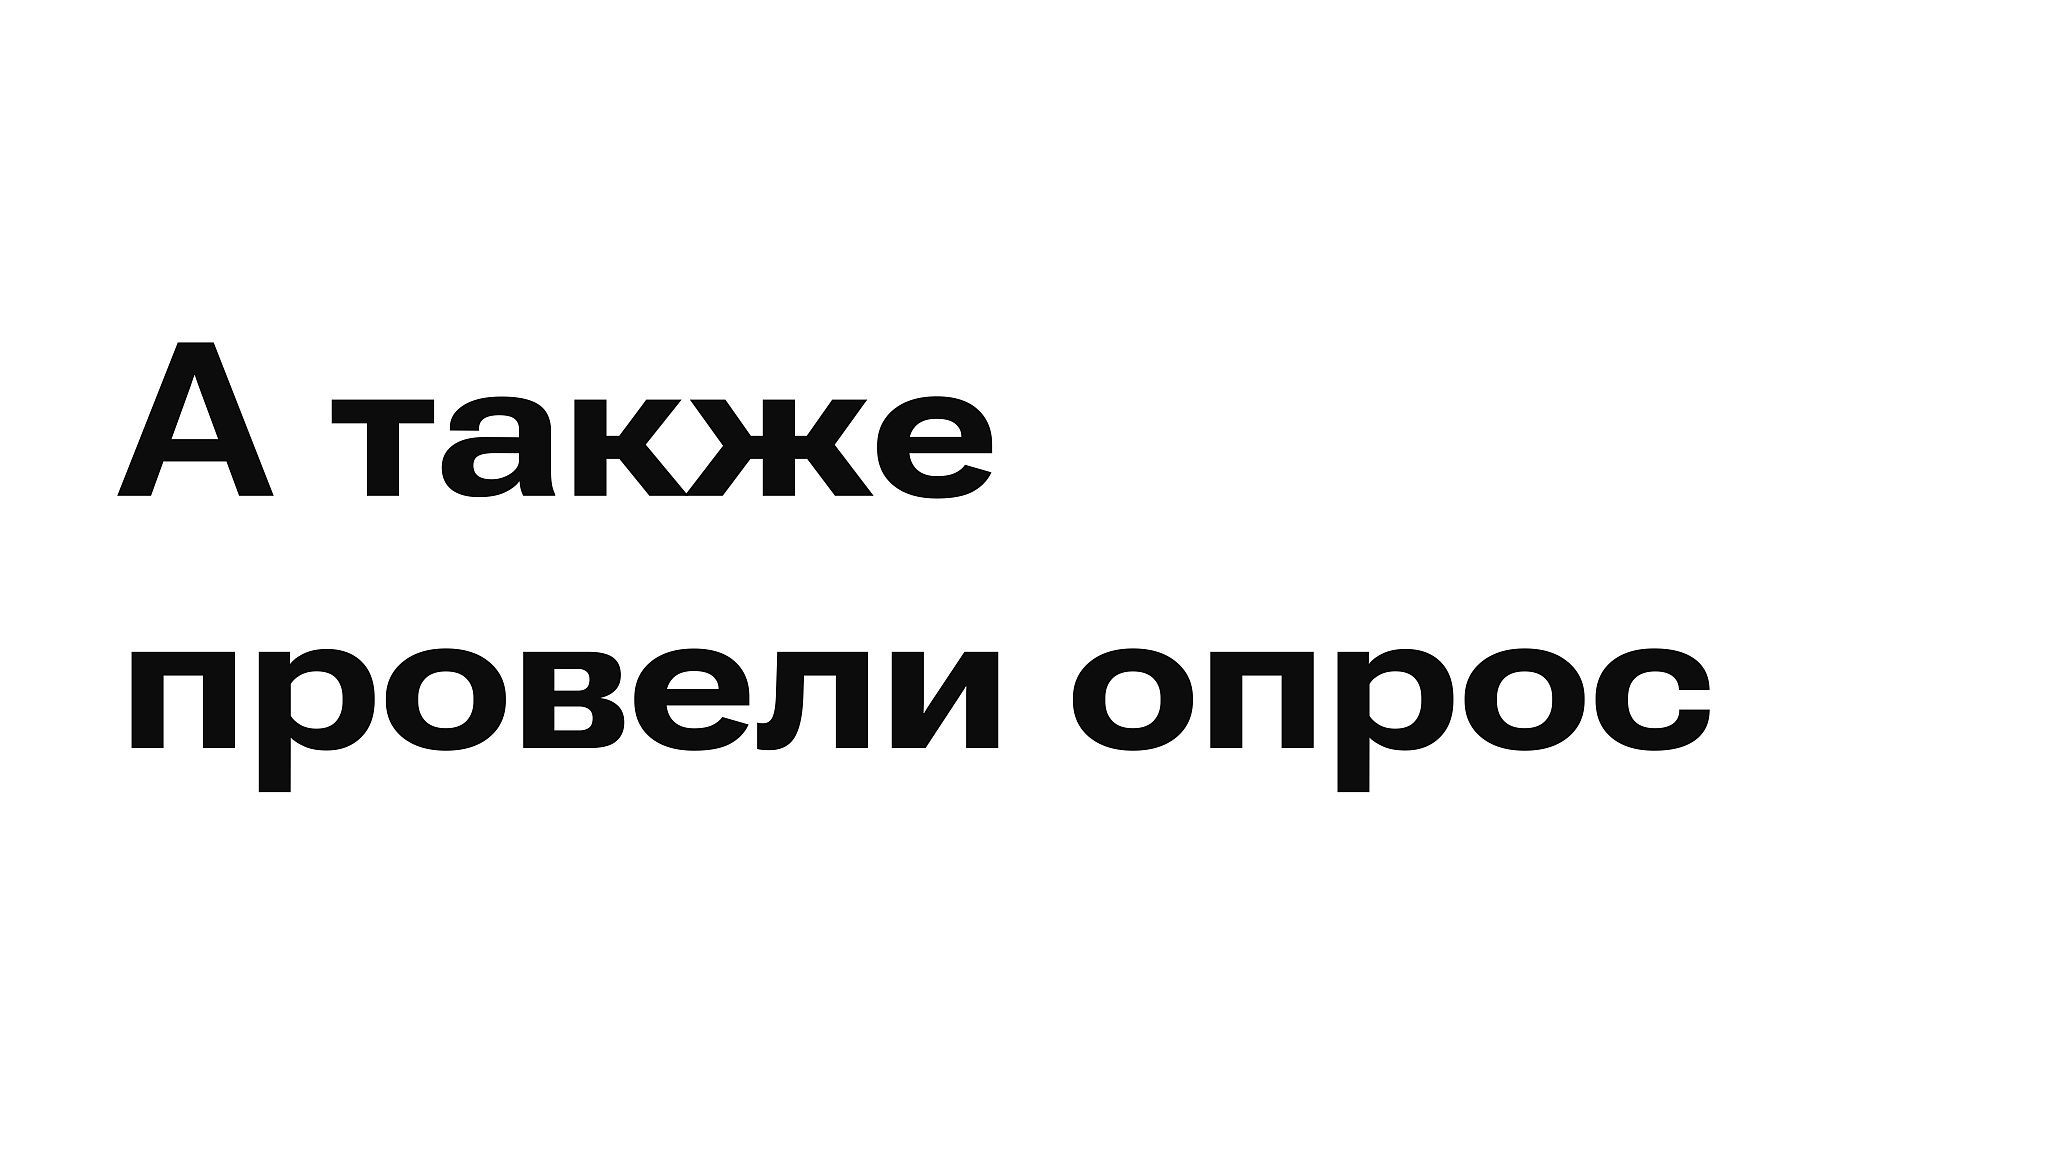 Яндекс Еда